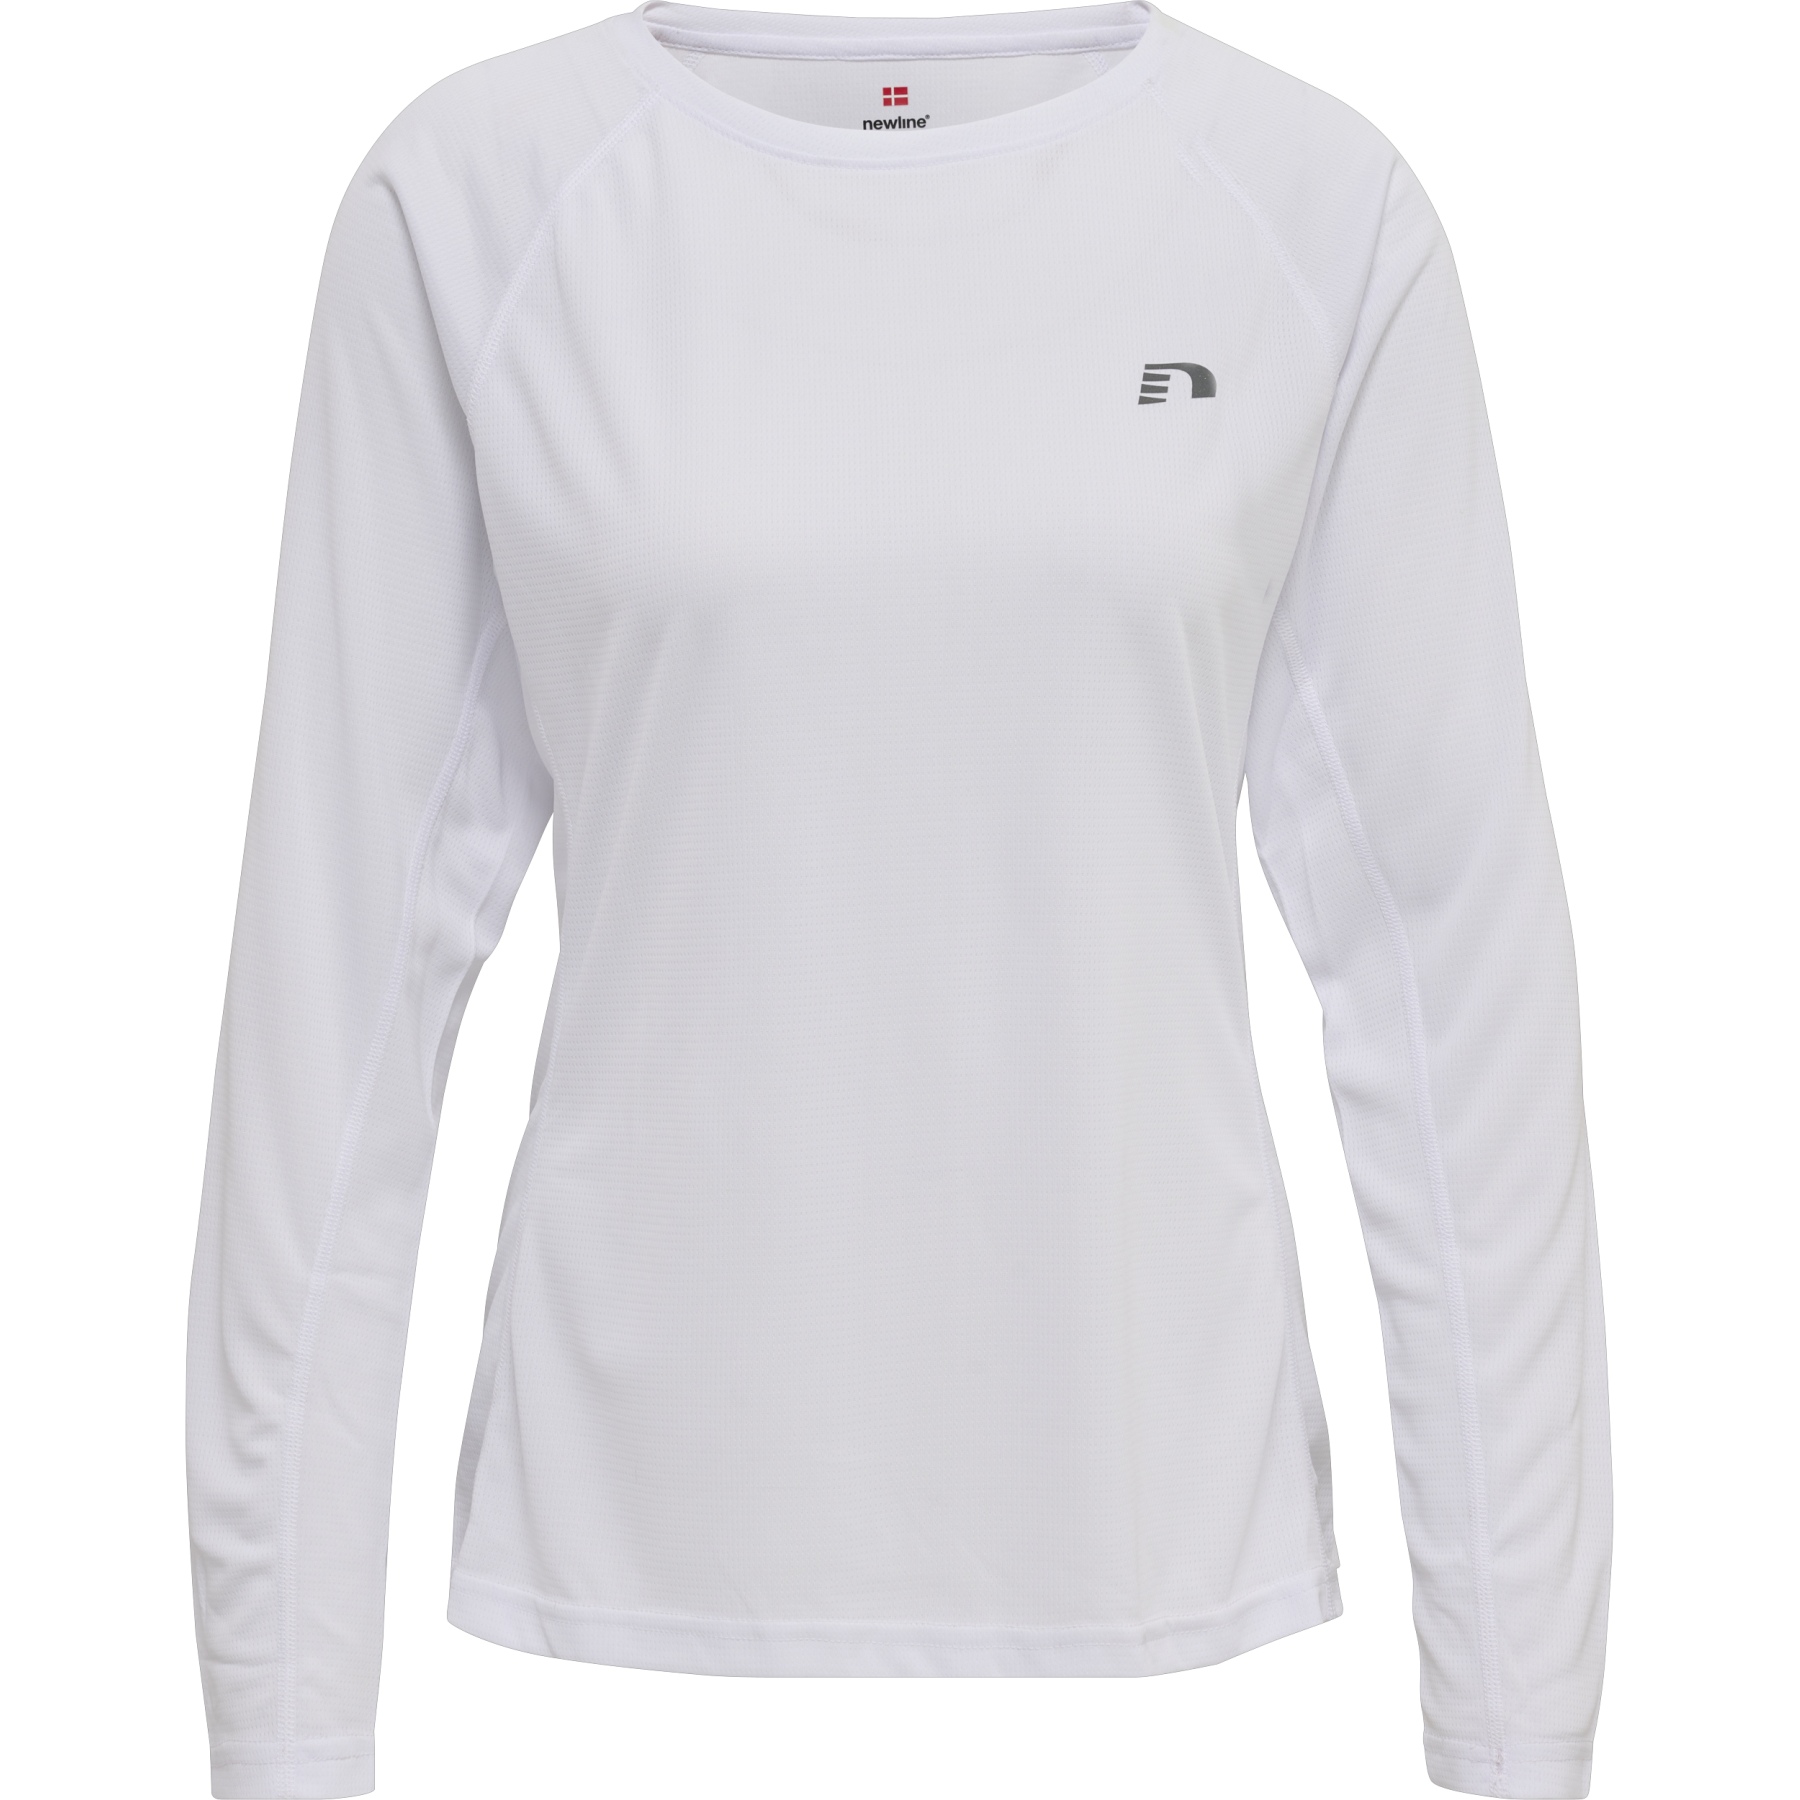 Productfoto van Newline Core Running Longsleeve Shirt Women - white